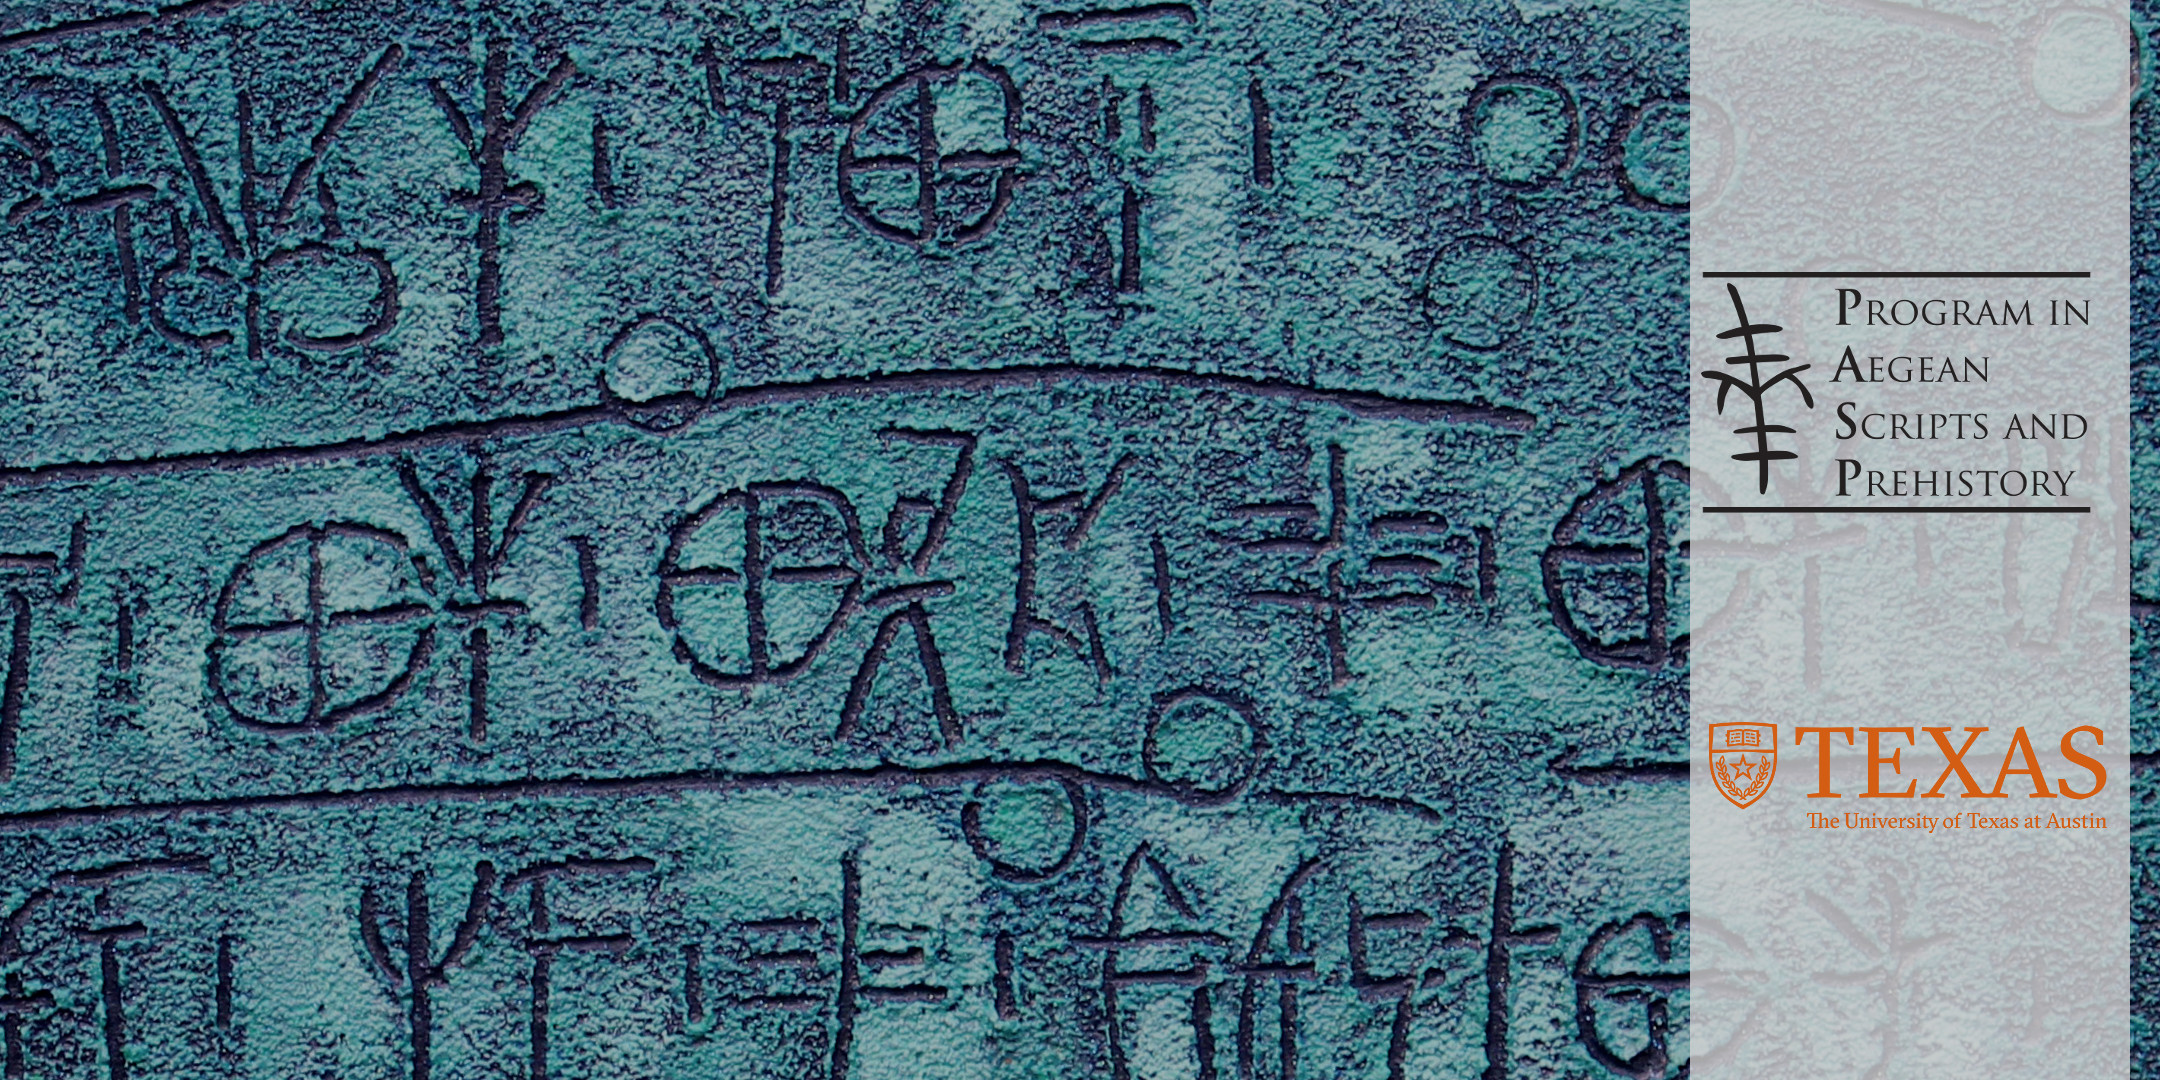 Program in Aegean Scripts and Prehistory